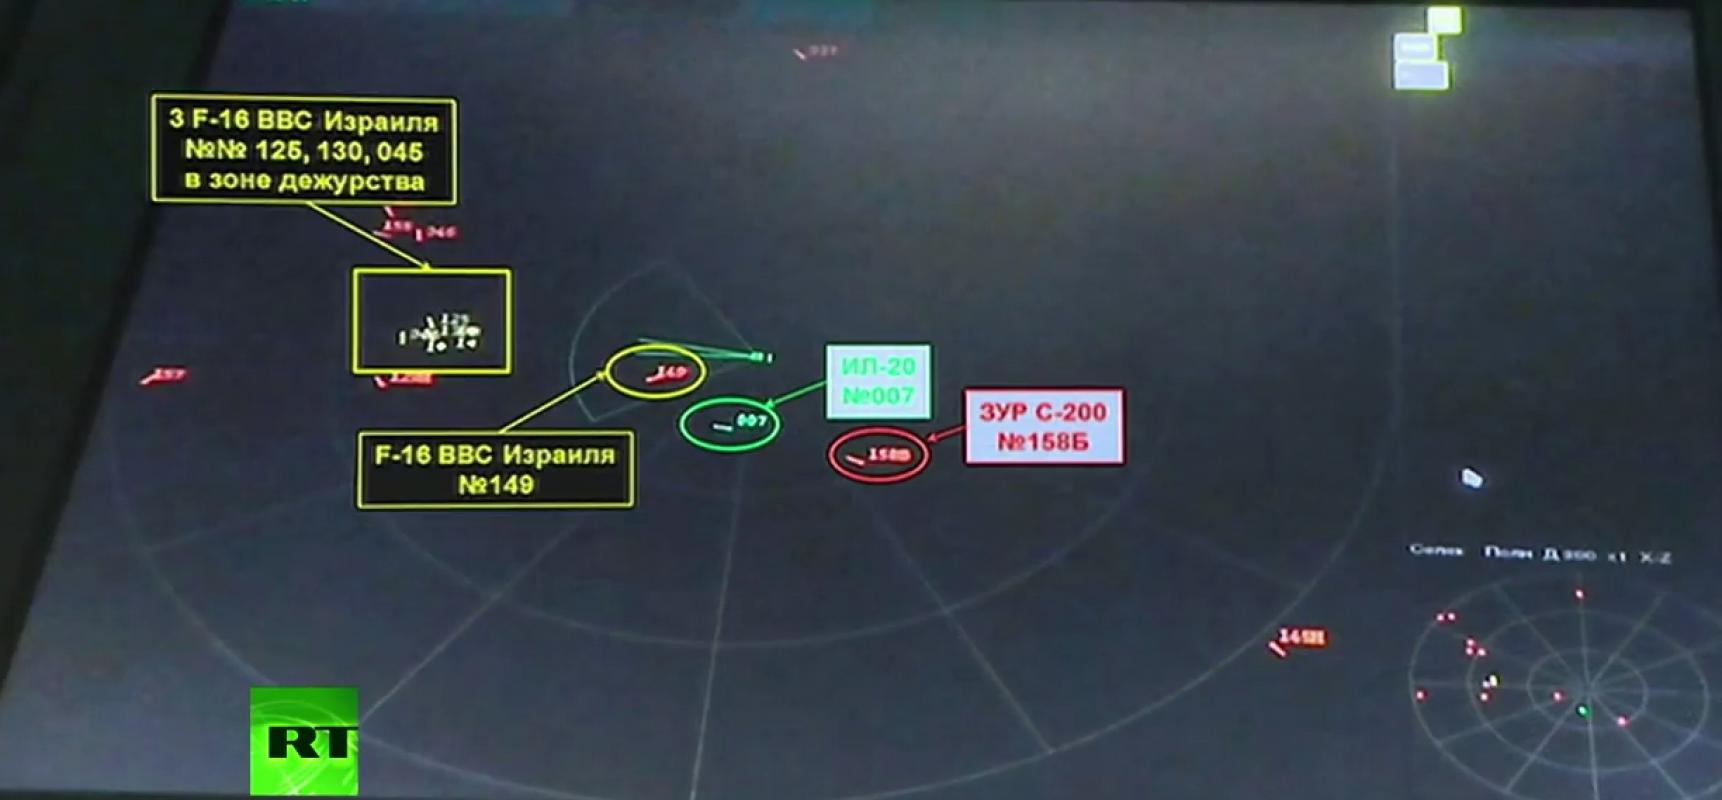 Rusijos gynybos ministerija pristatė S-400 sistemos radaro duomenis, įrodančius Izraelio oro pajėgų kaltę, numušant IL-20 / Минобороны представило данные с радара С-400, доказывающие вину ВВС Израиля в гибели Ил-20